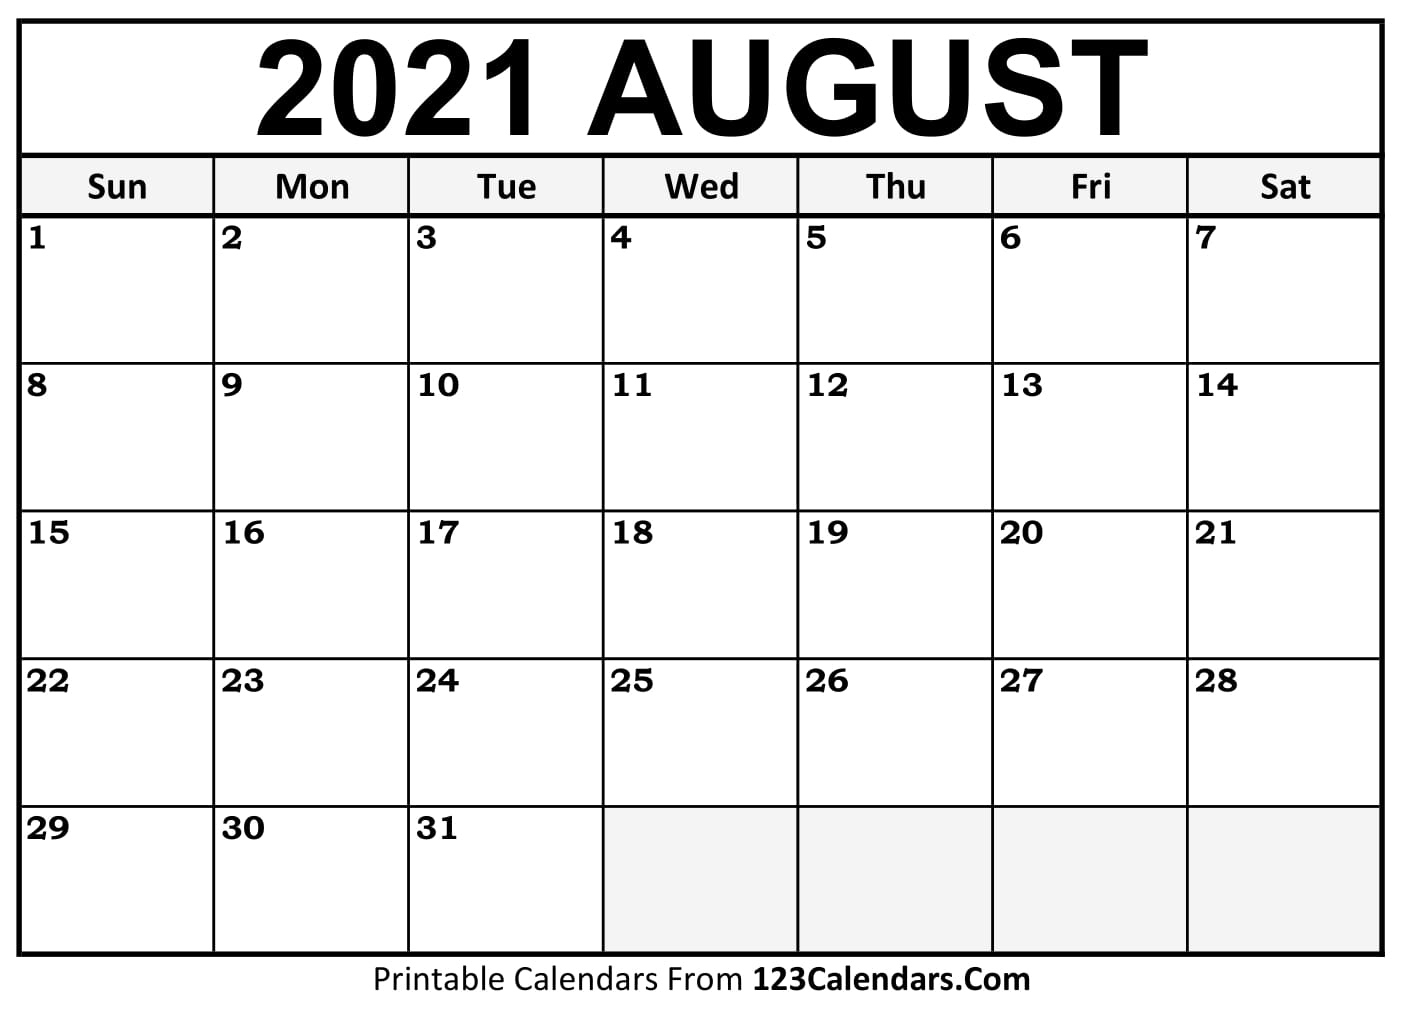 Printable August 2021 Calendar Templates | 123Calendars August 2021 Calendar Hindi